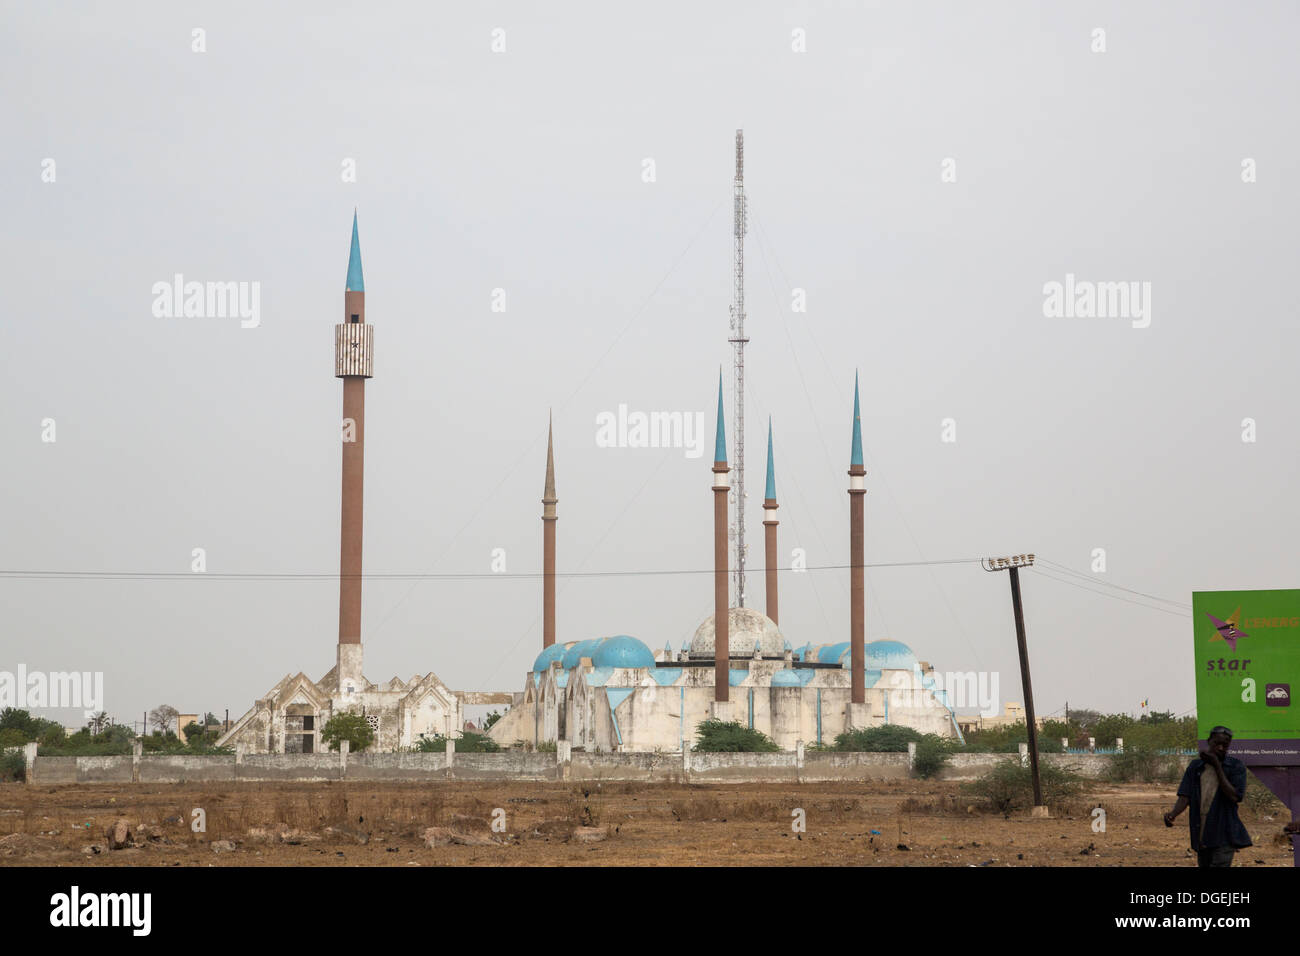 Mosque, Tall Minarets, and Telecommunications Tower, Kaolack, Senegal. Stock Photo